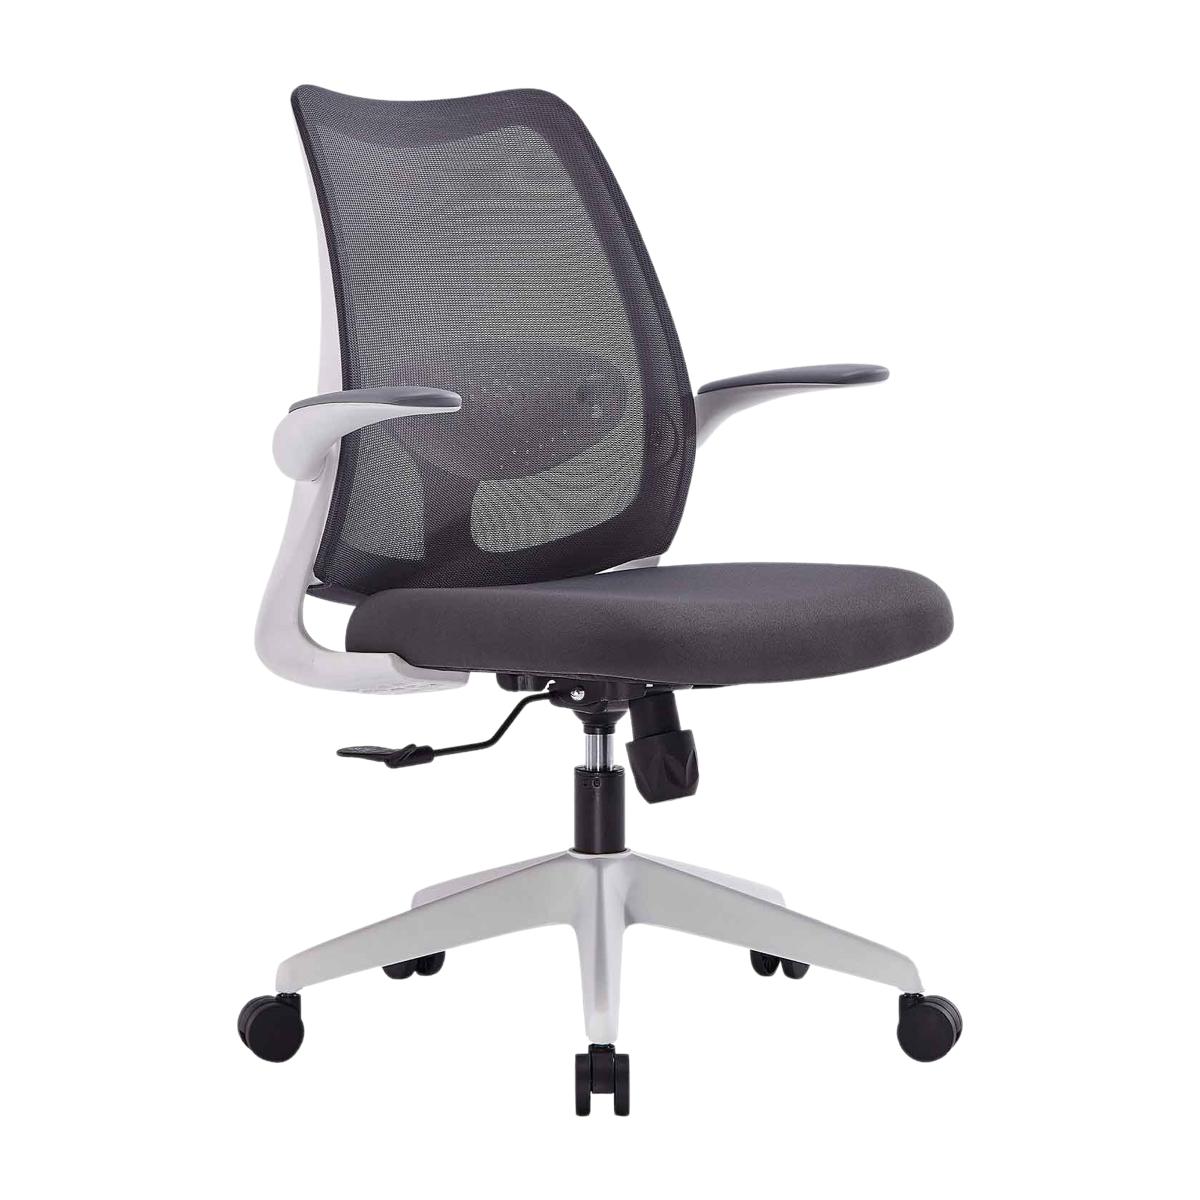 Super Chair เก้าอี้สำนักงาน รุ่น New Gen M WHITE